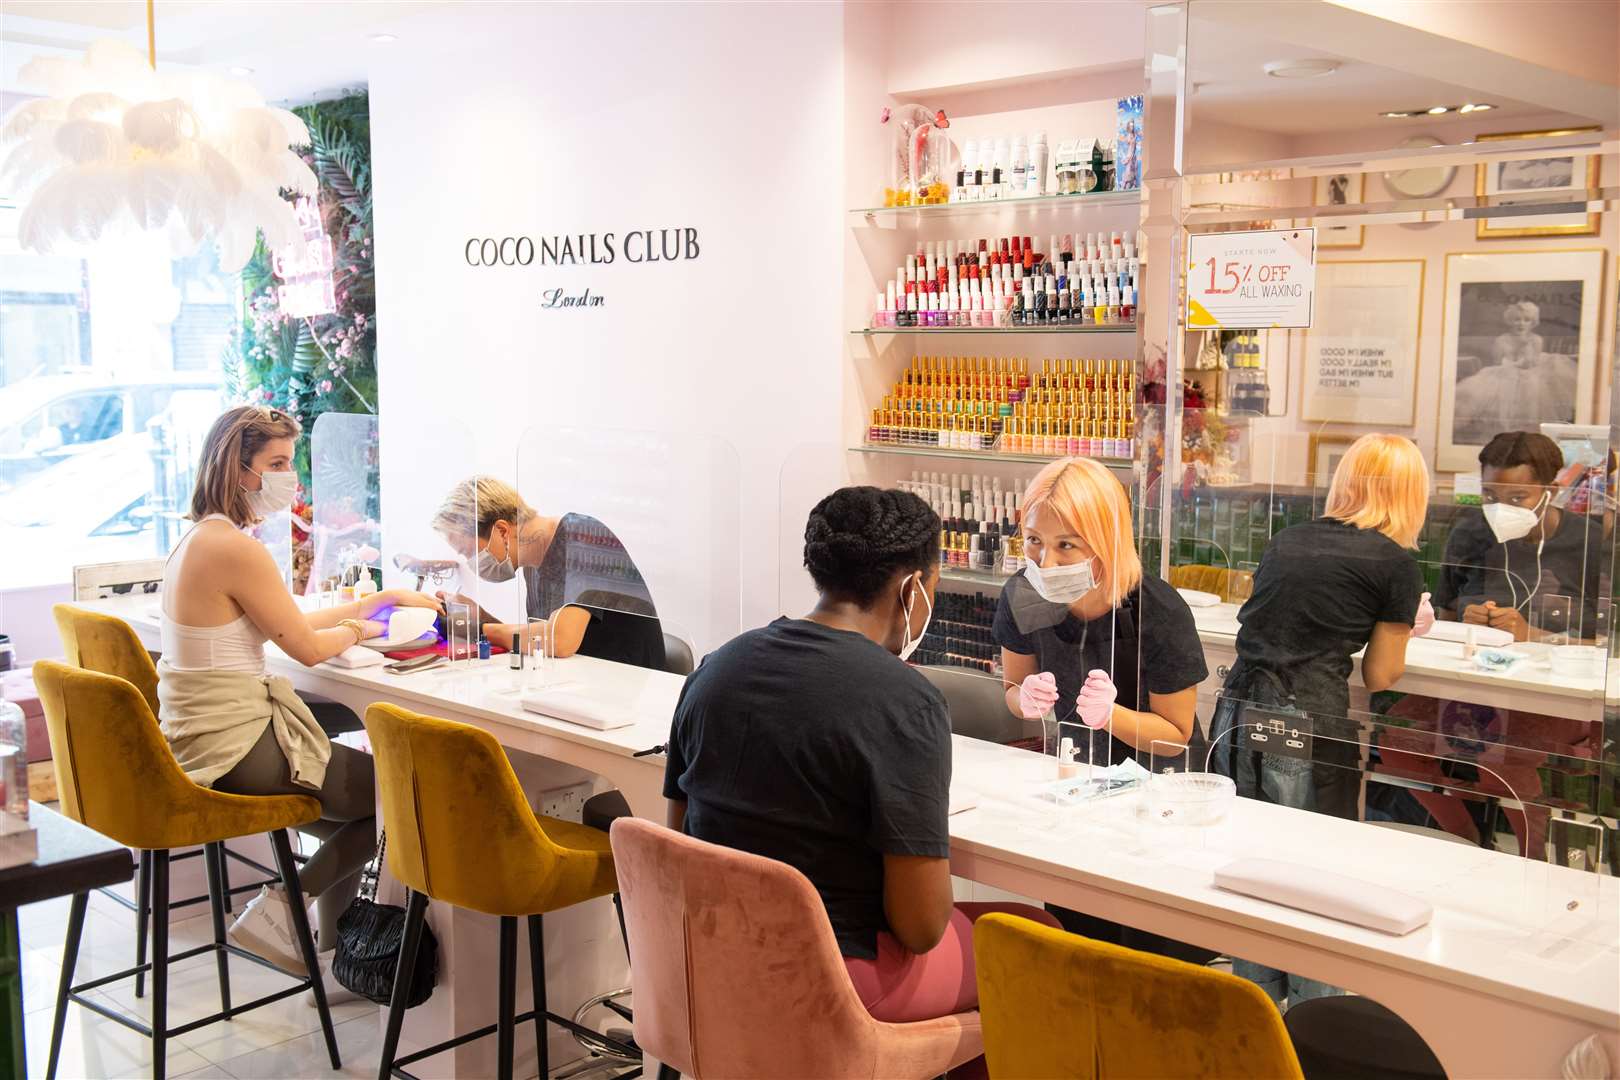 Customers observe social distancing behind screens at Coco Nails Club in London (Dominic Lipinski/PA)